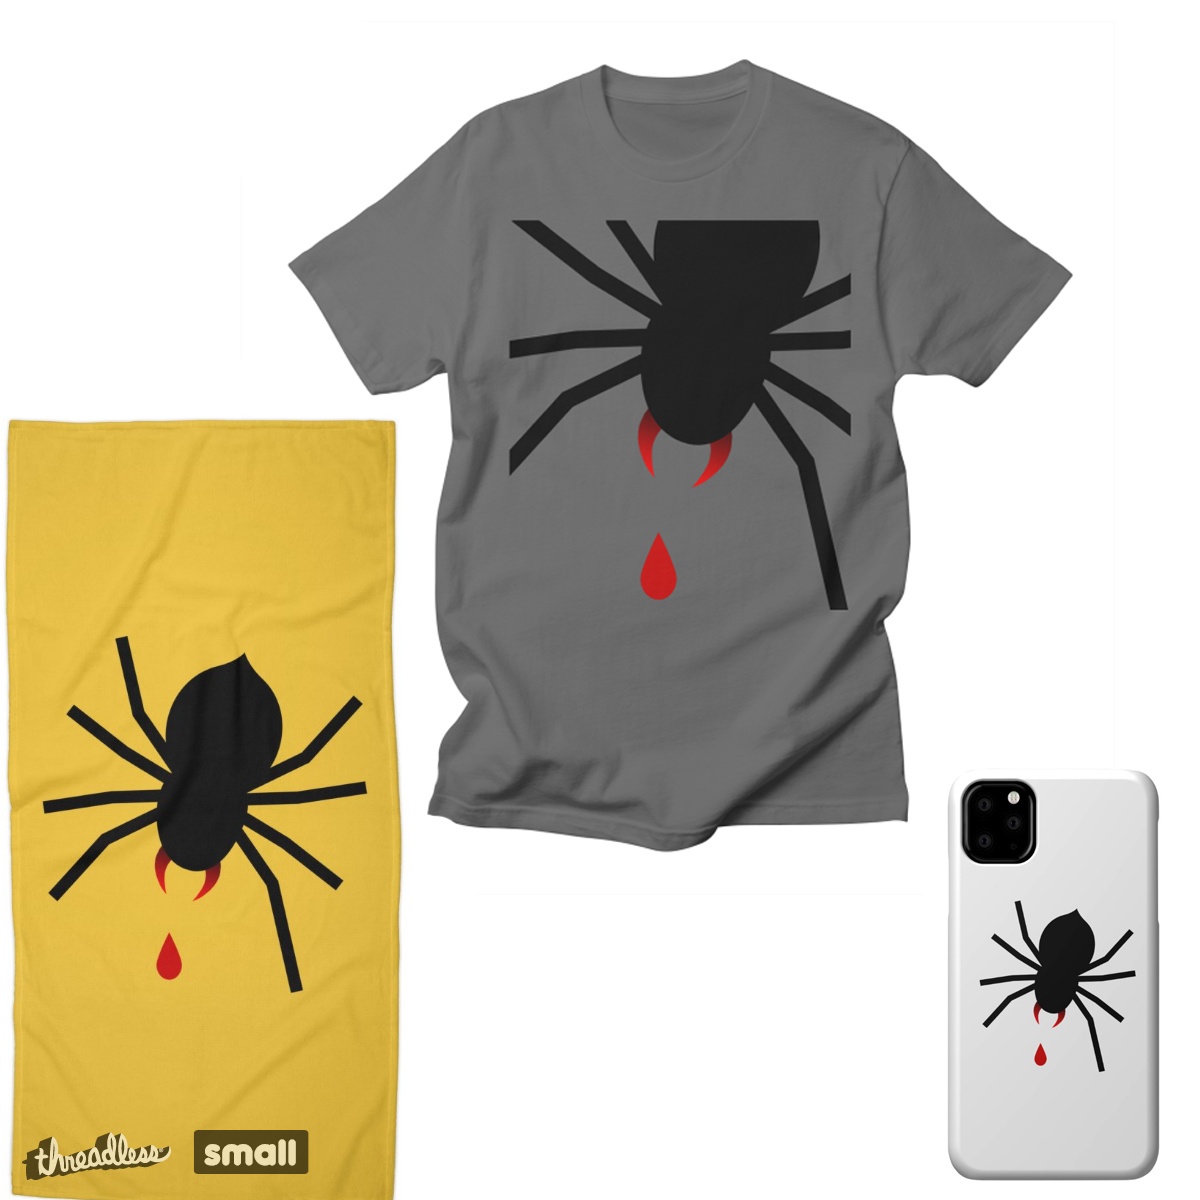 The big spider, a cool t-shirt design